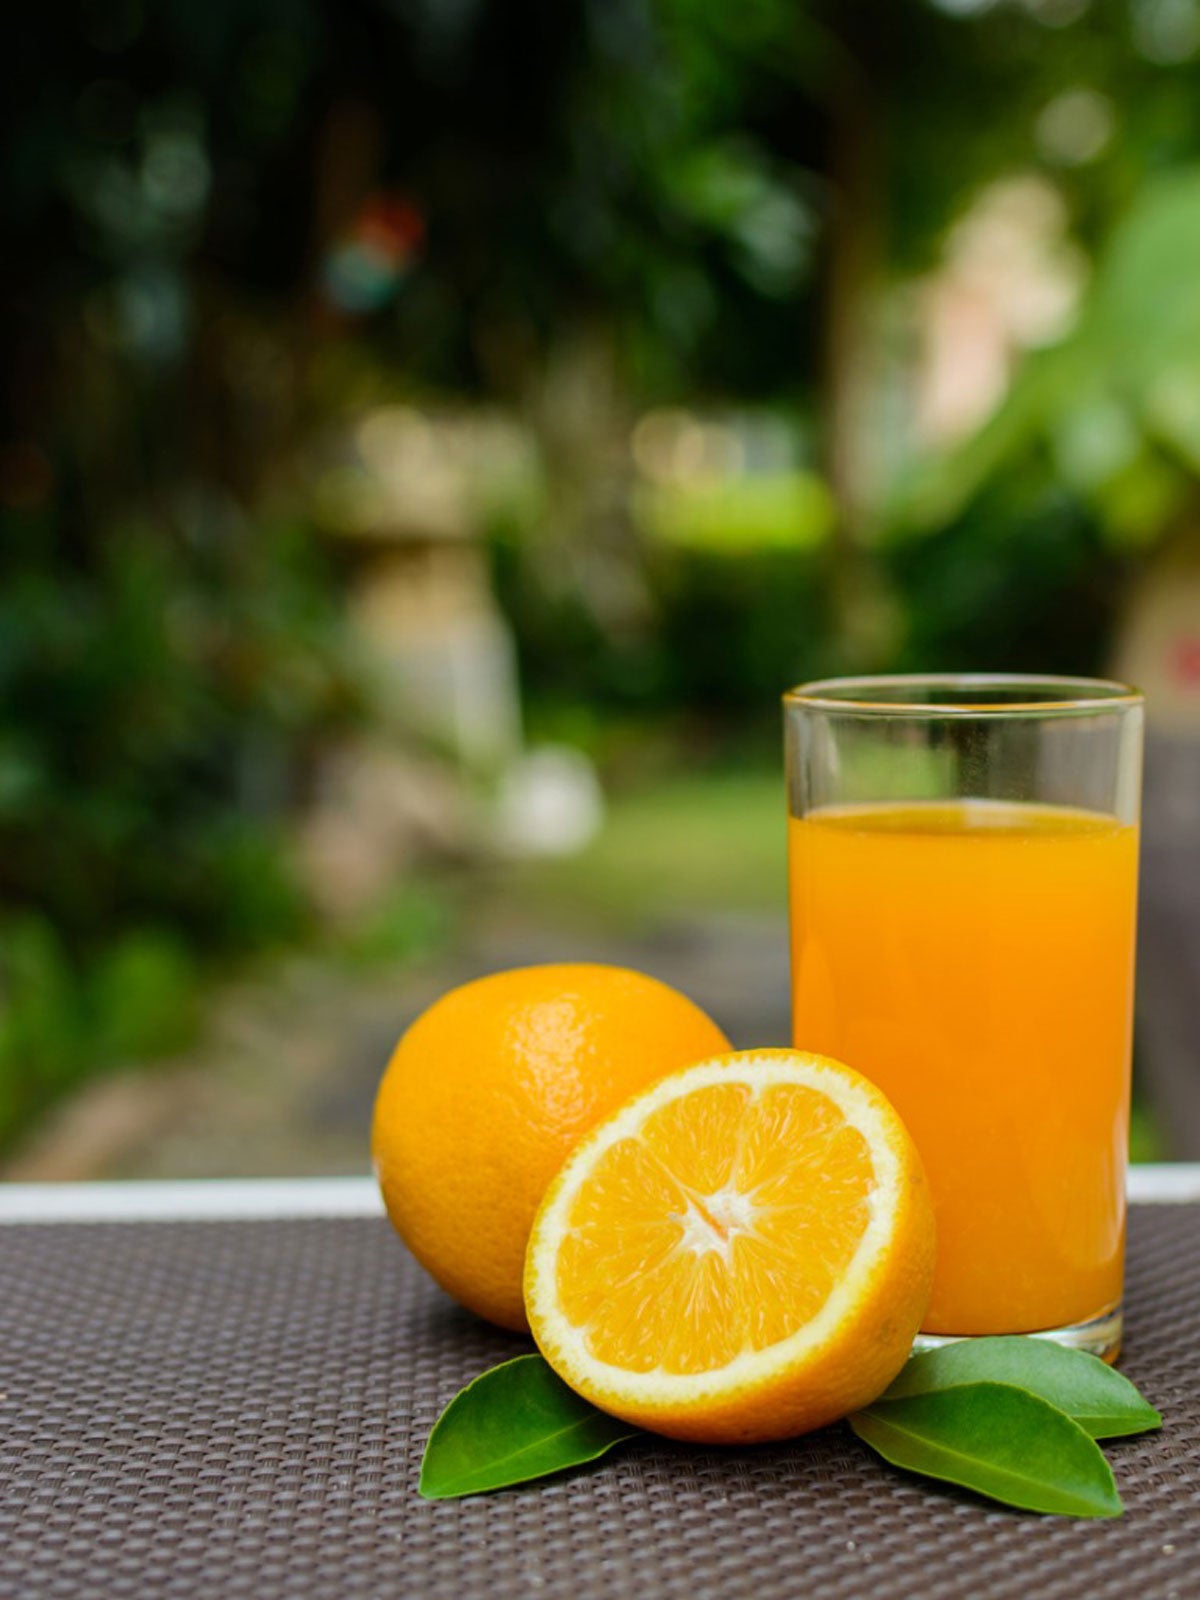 Is Lemon Juice Good For Plants? 